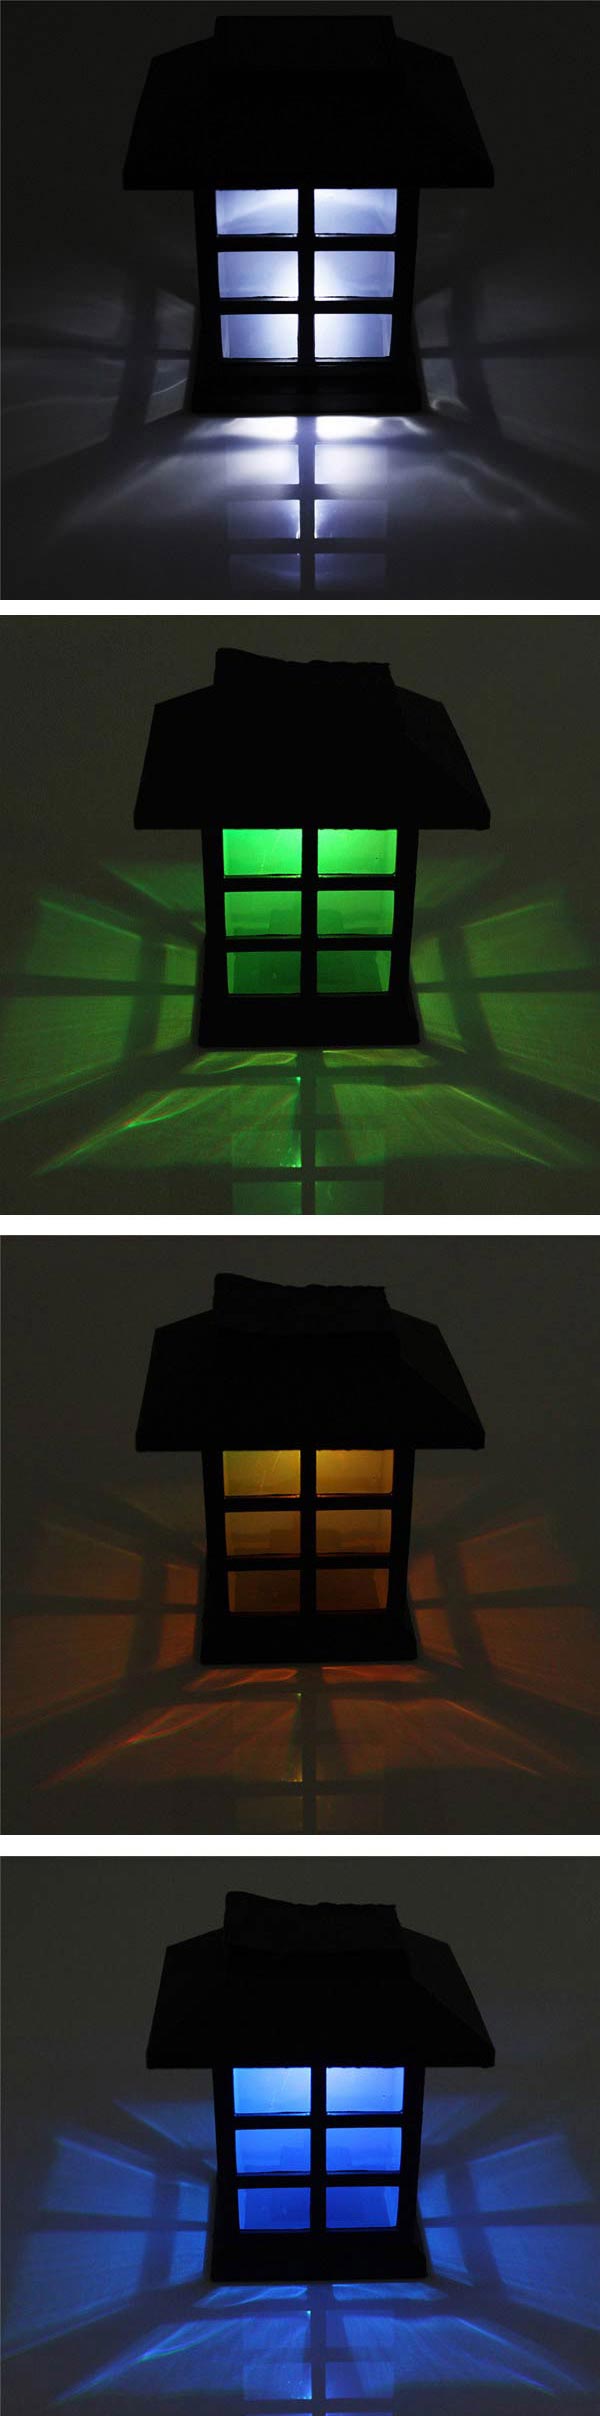 2pcs-Garden-Solar-Oriental-LED-Lamp-Outdoor-Yard-Lawn-Decorative-Light-998503-2